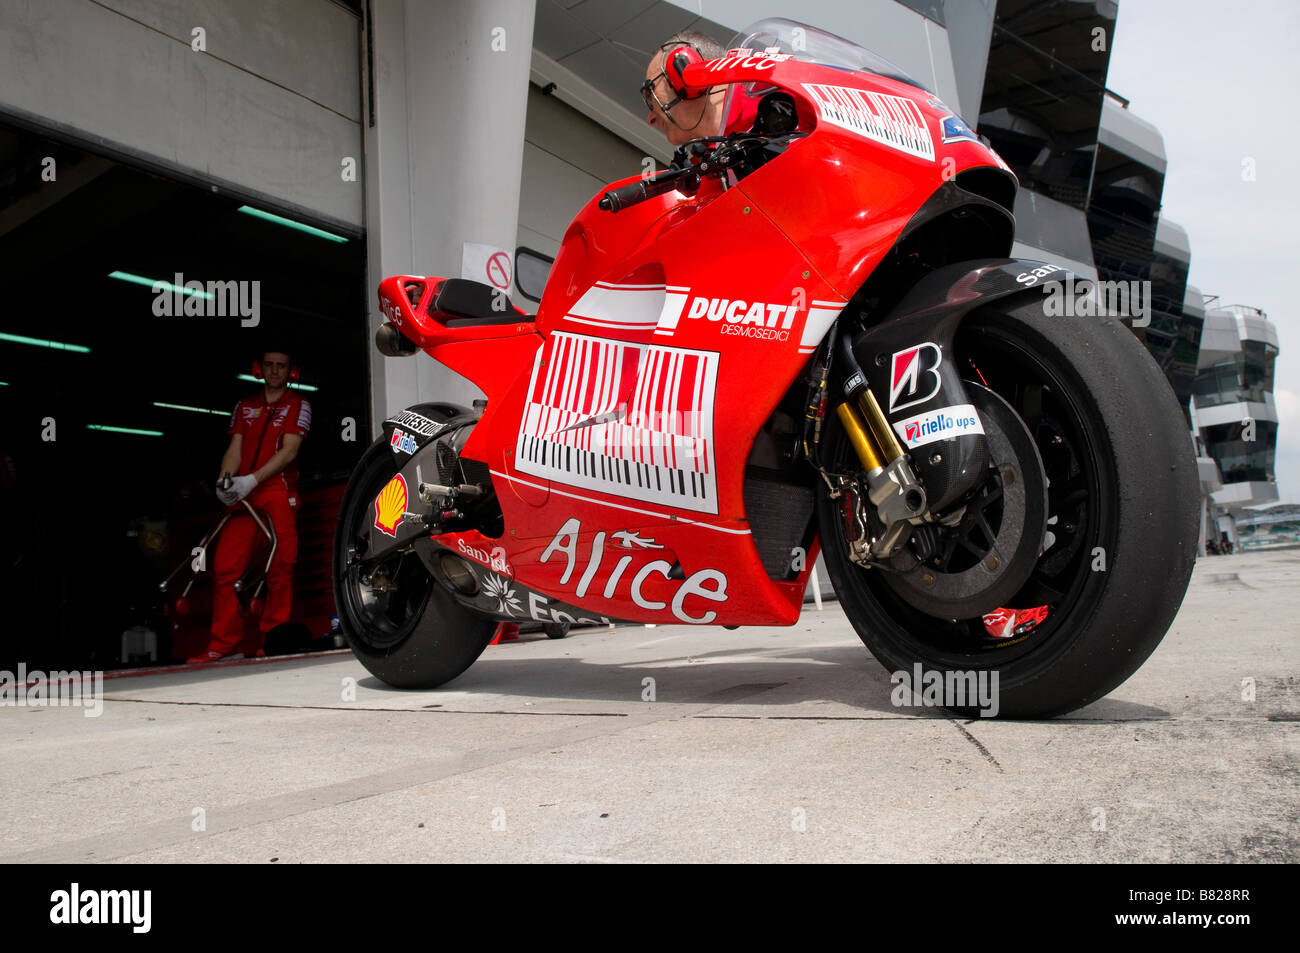 Ducati Casey Stoner MotoGP rider's bike Photo Stock - Alamy